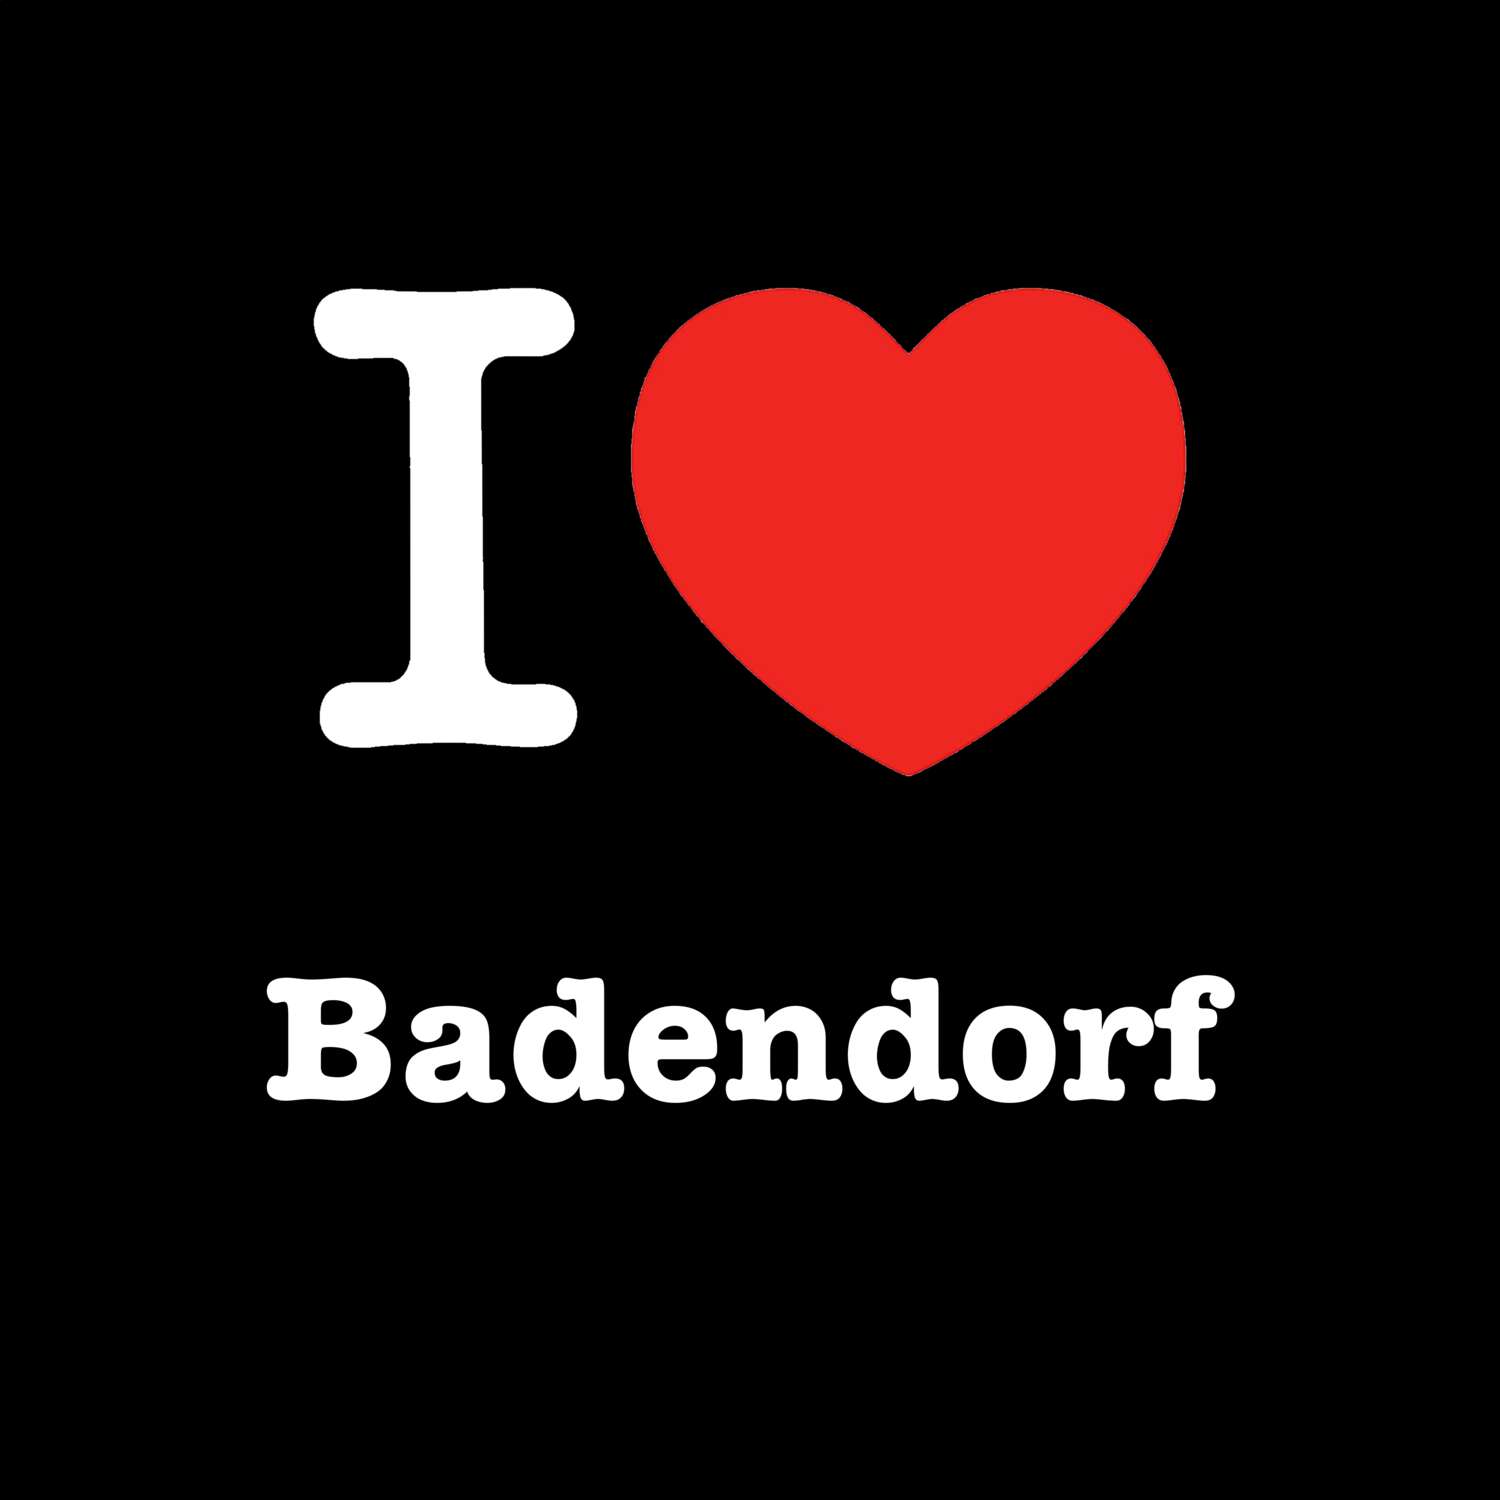 Badendorf T-Shirt »I love«